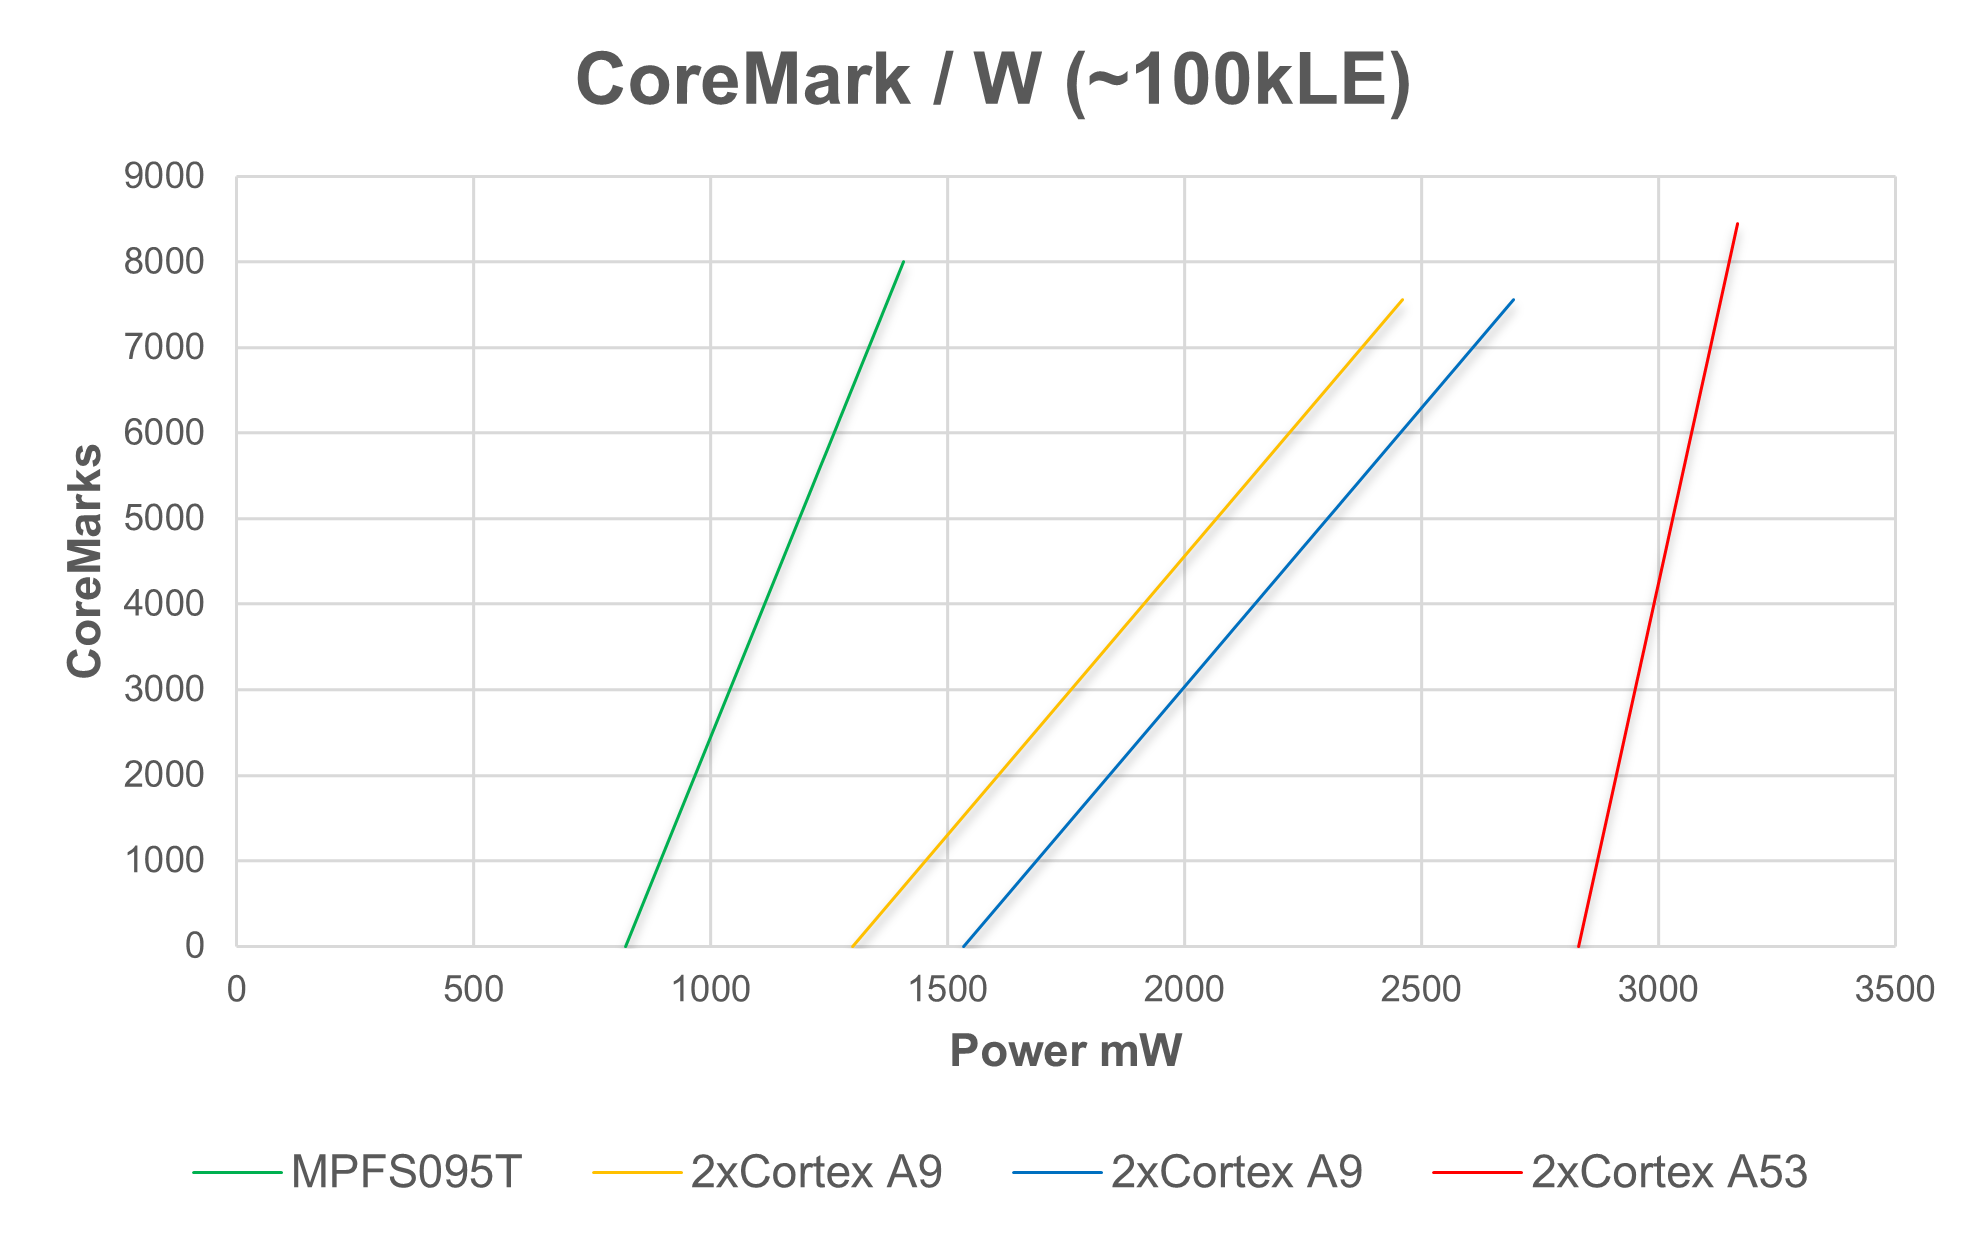 CoreMark per watt for 100kLE